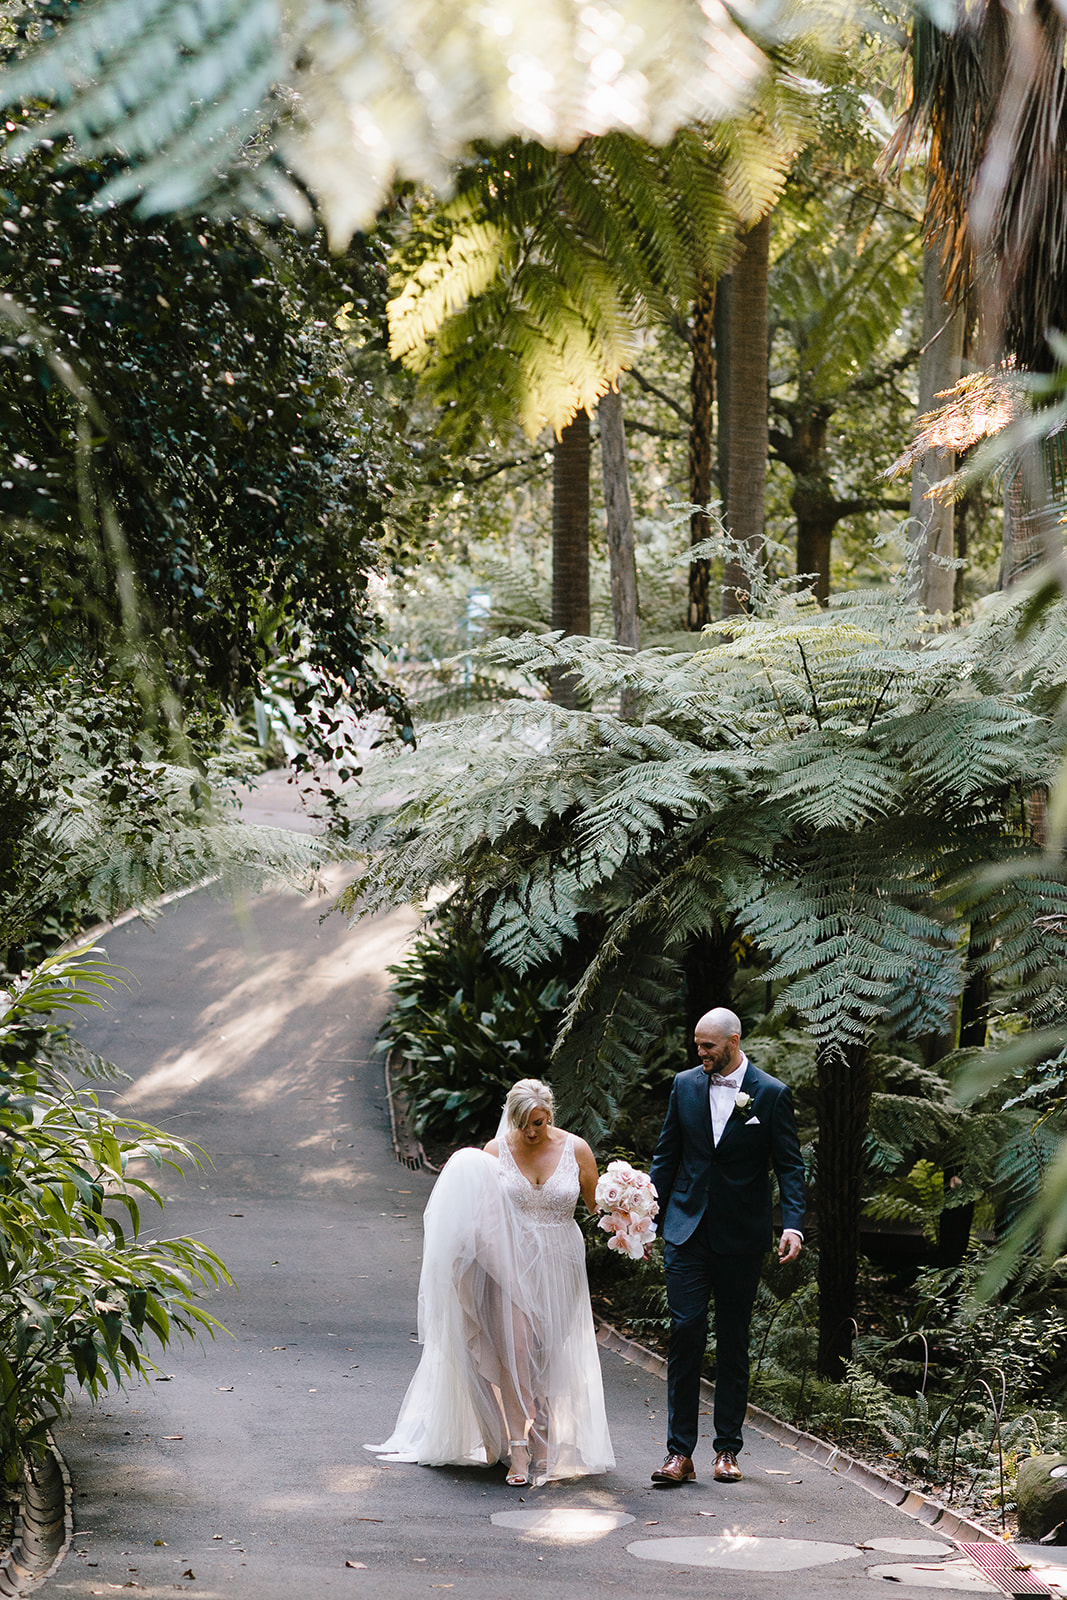 Bridal portraits at The Terrace Royal Botanic Gardens Melbourne wedding